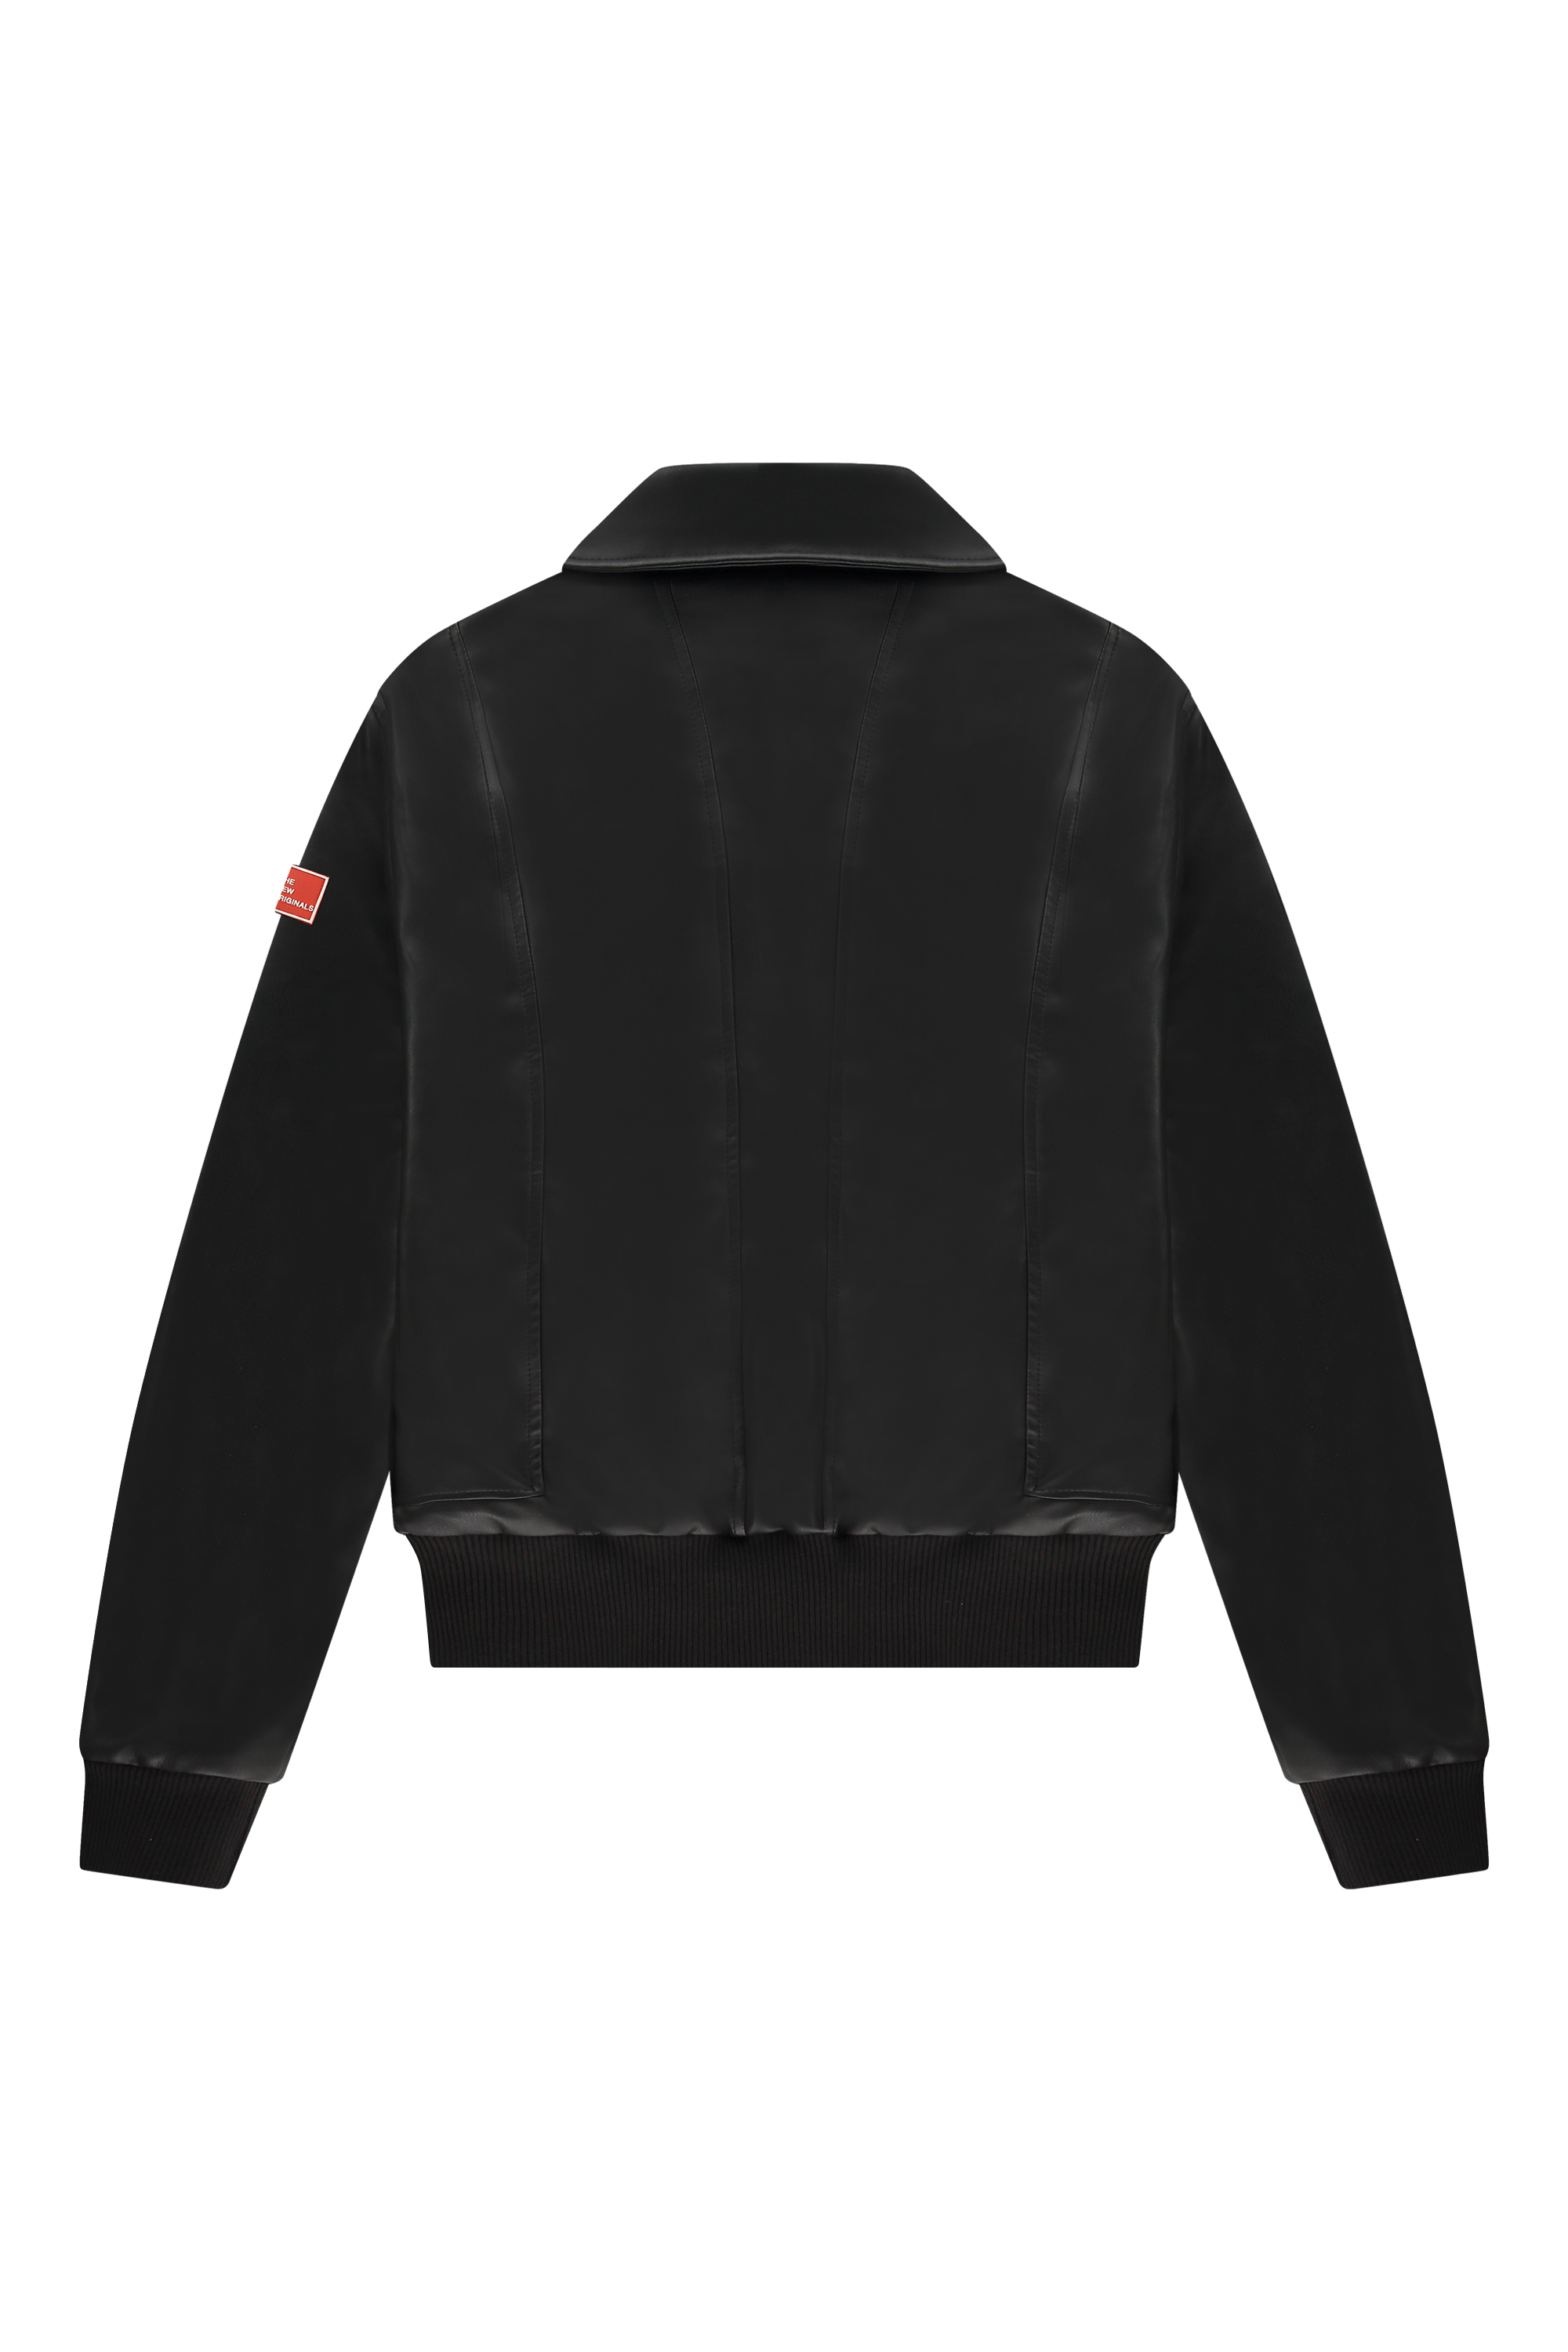 products-leatherjacket_black_back-png